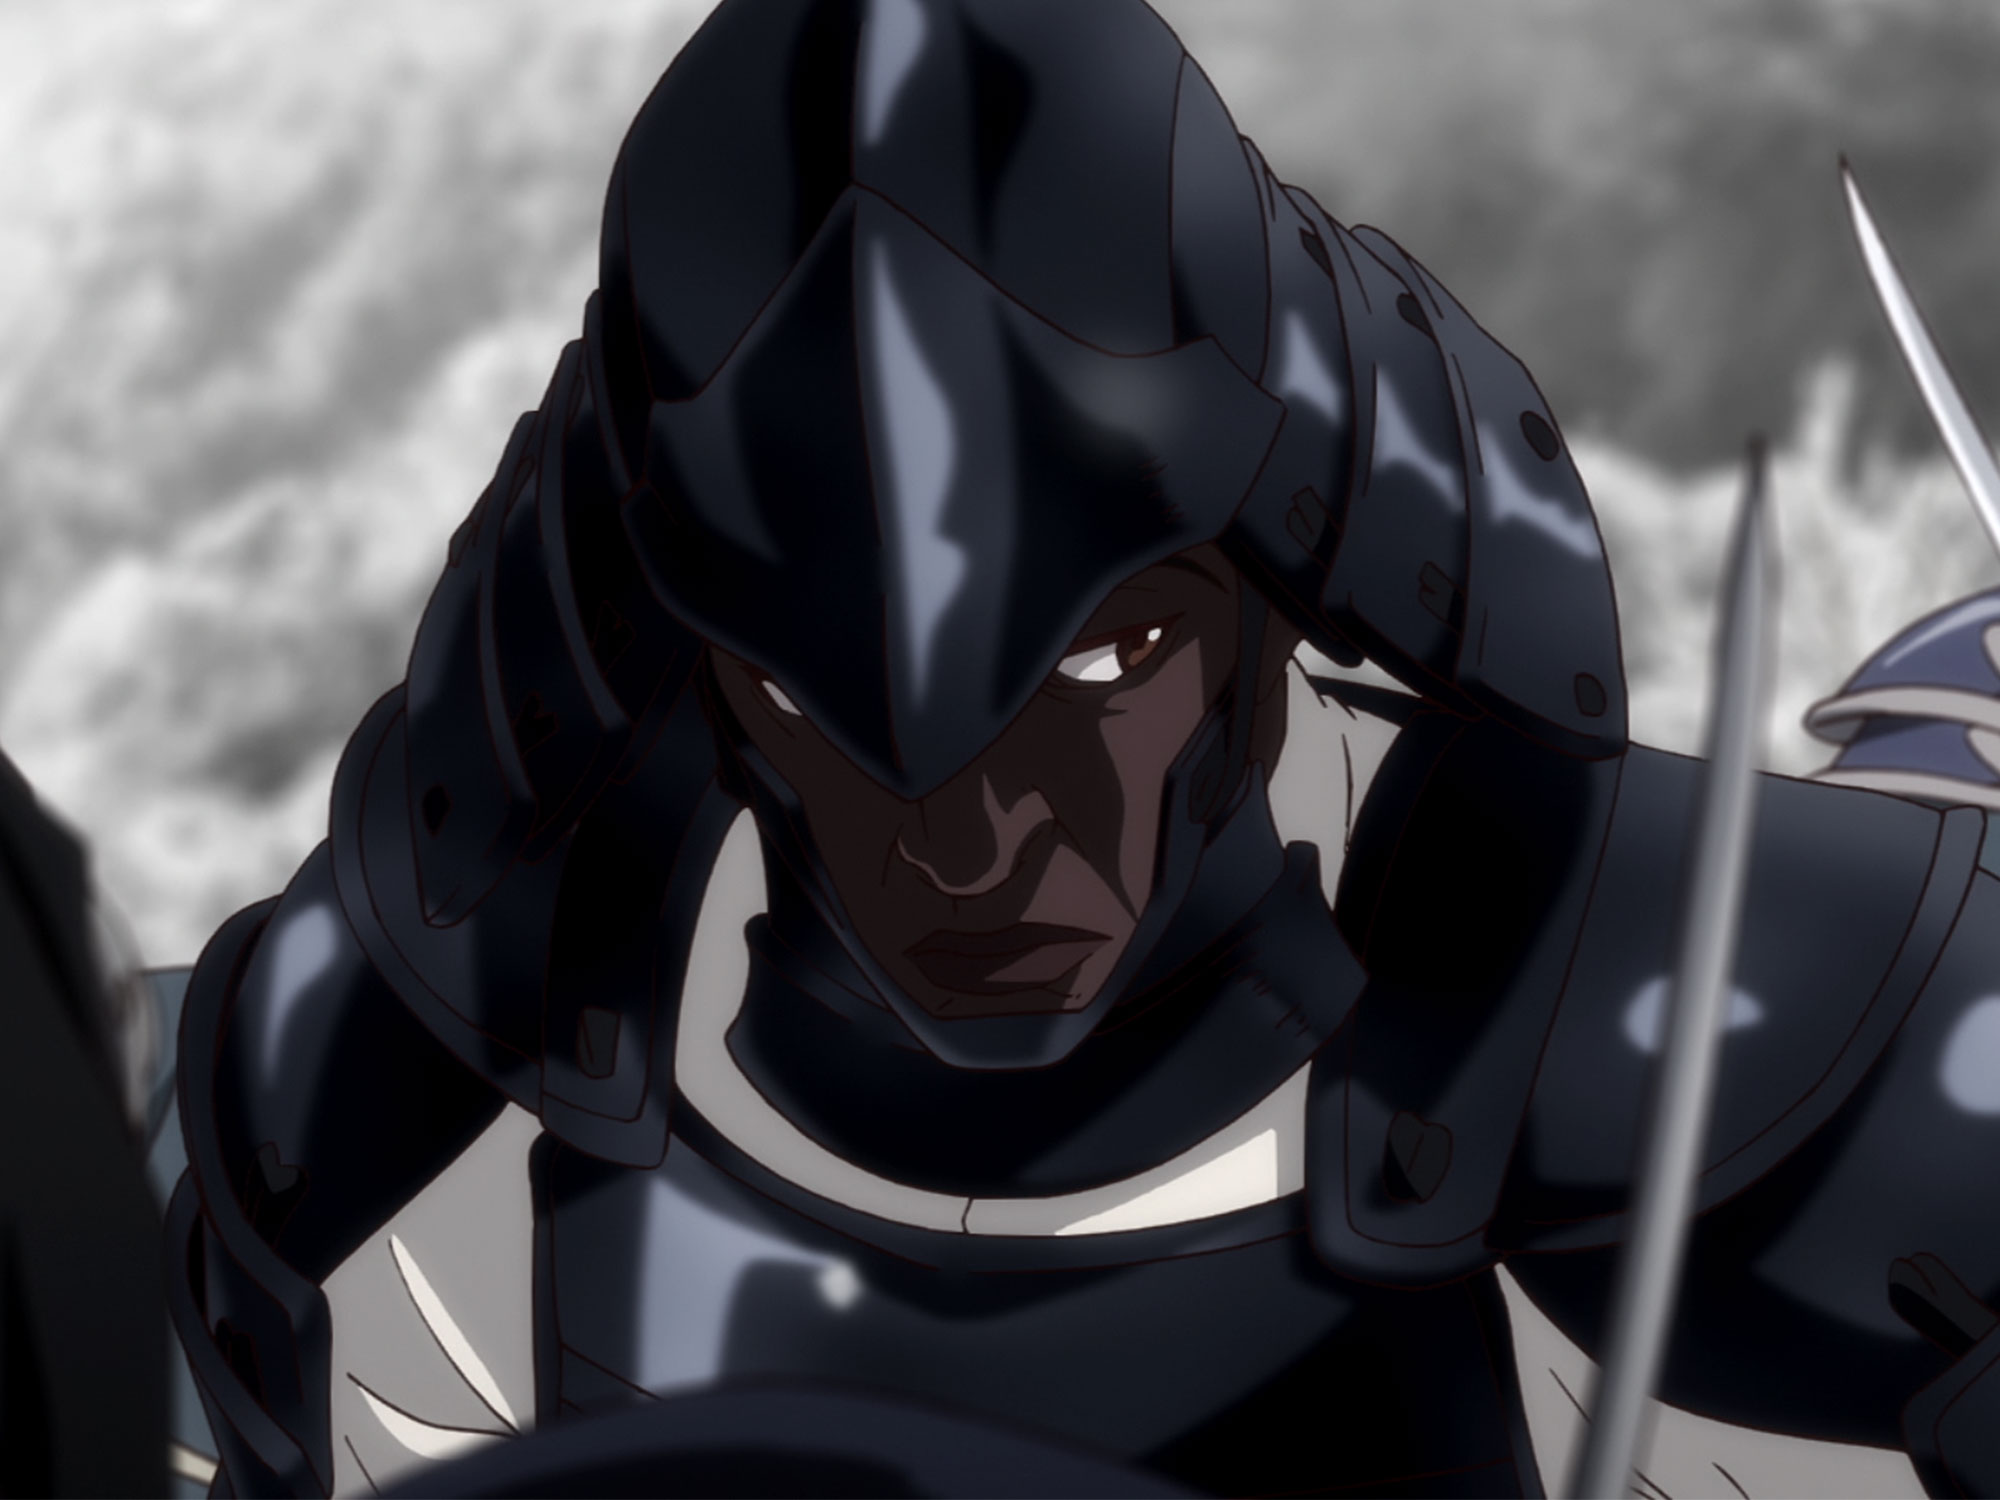 Black Anime Knight's Stance - inspiring black anime pfp artwork - Image  Chest - Free Image Hosting And Sharing Made Easy